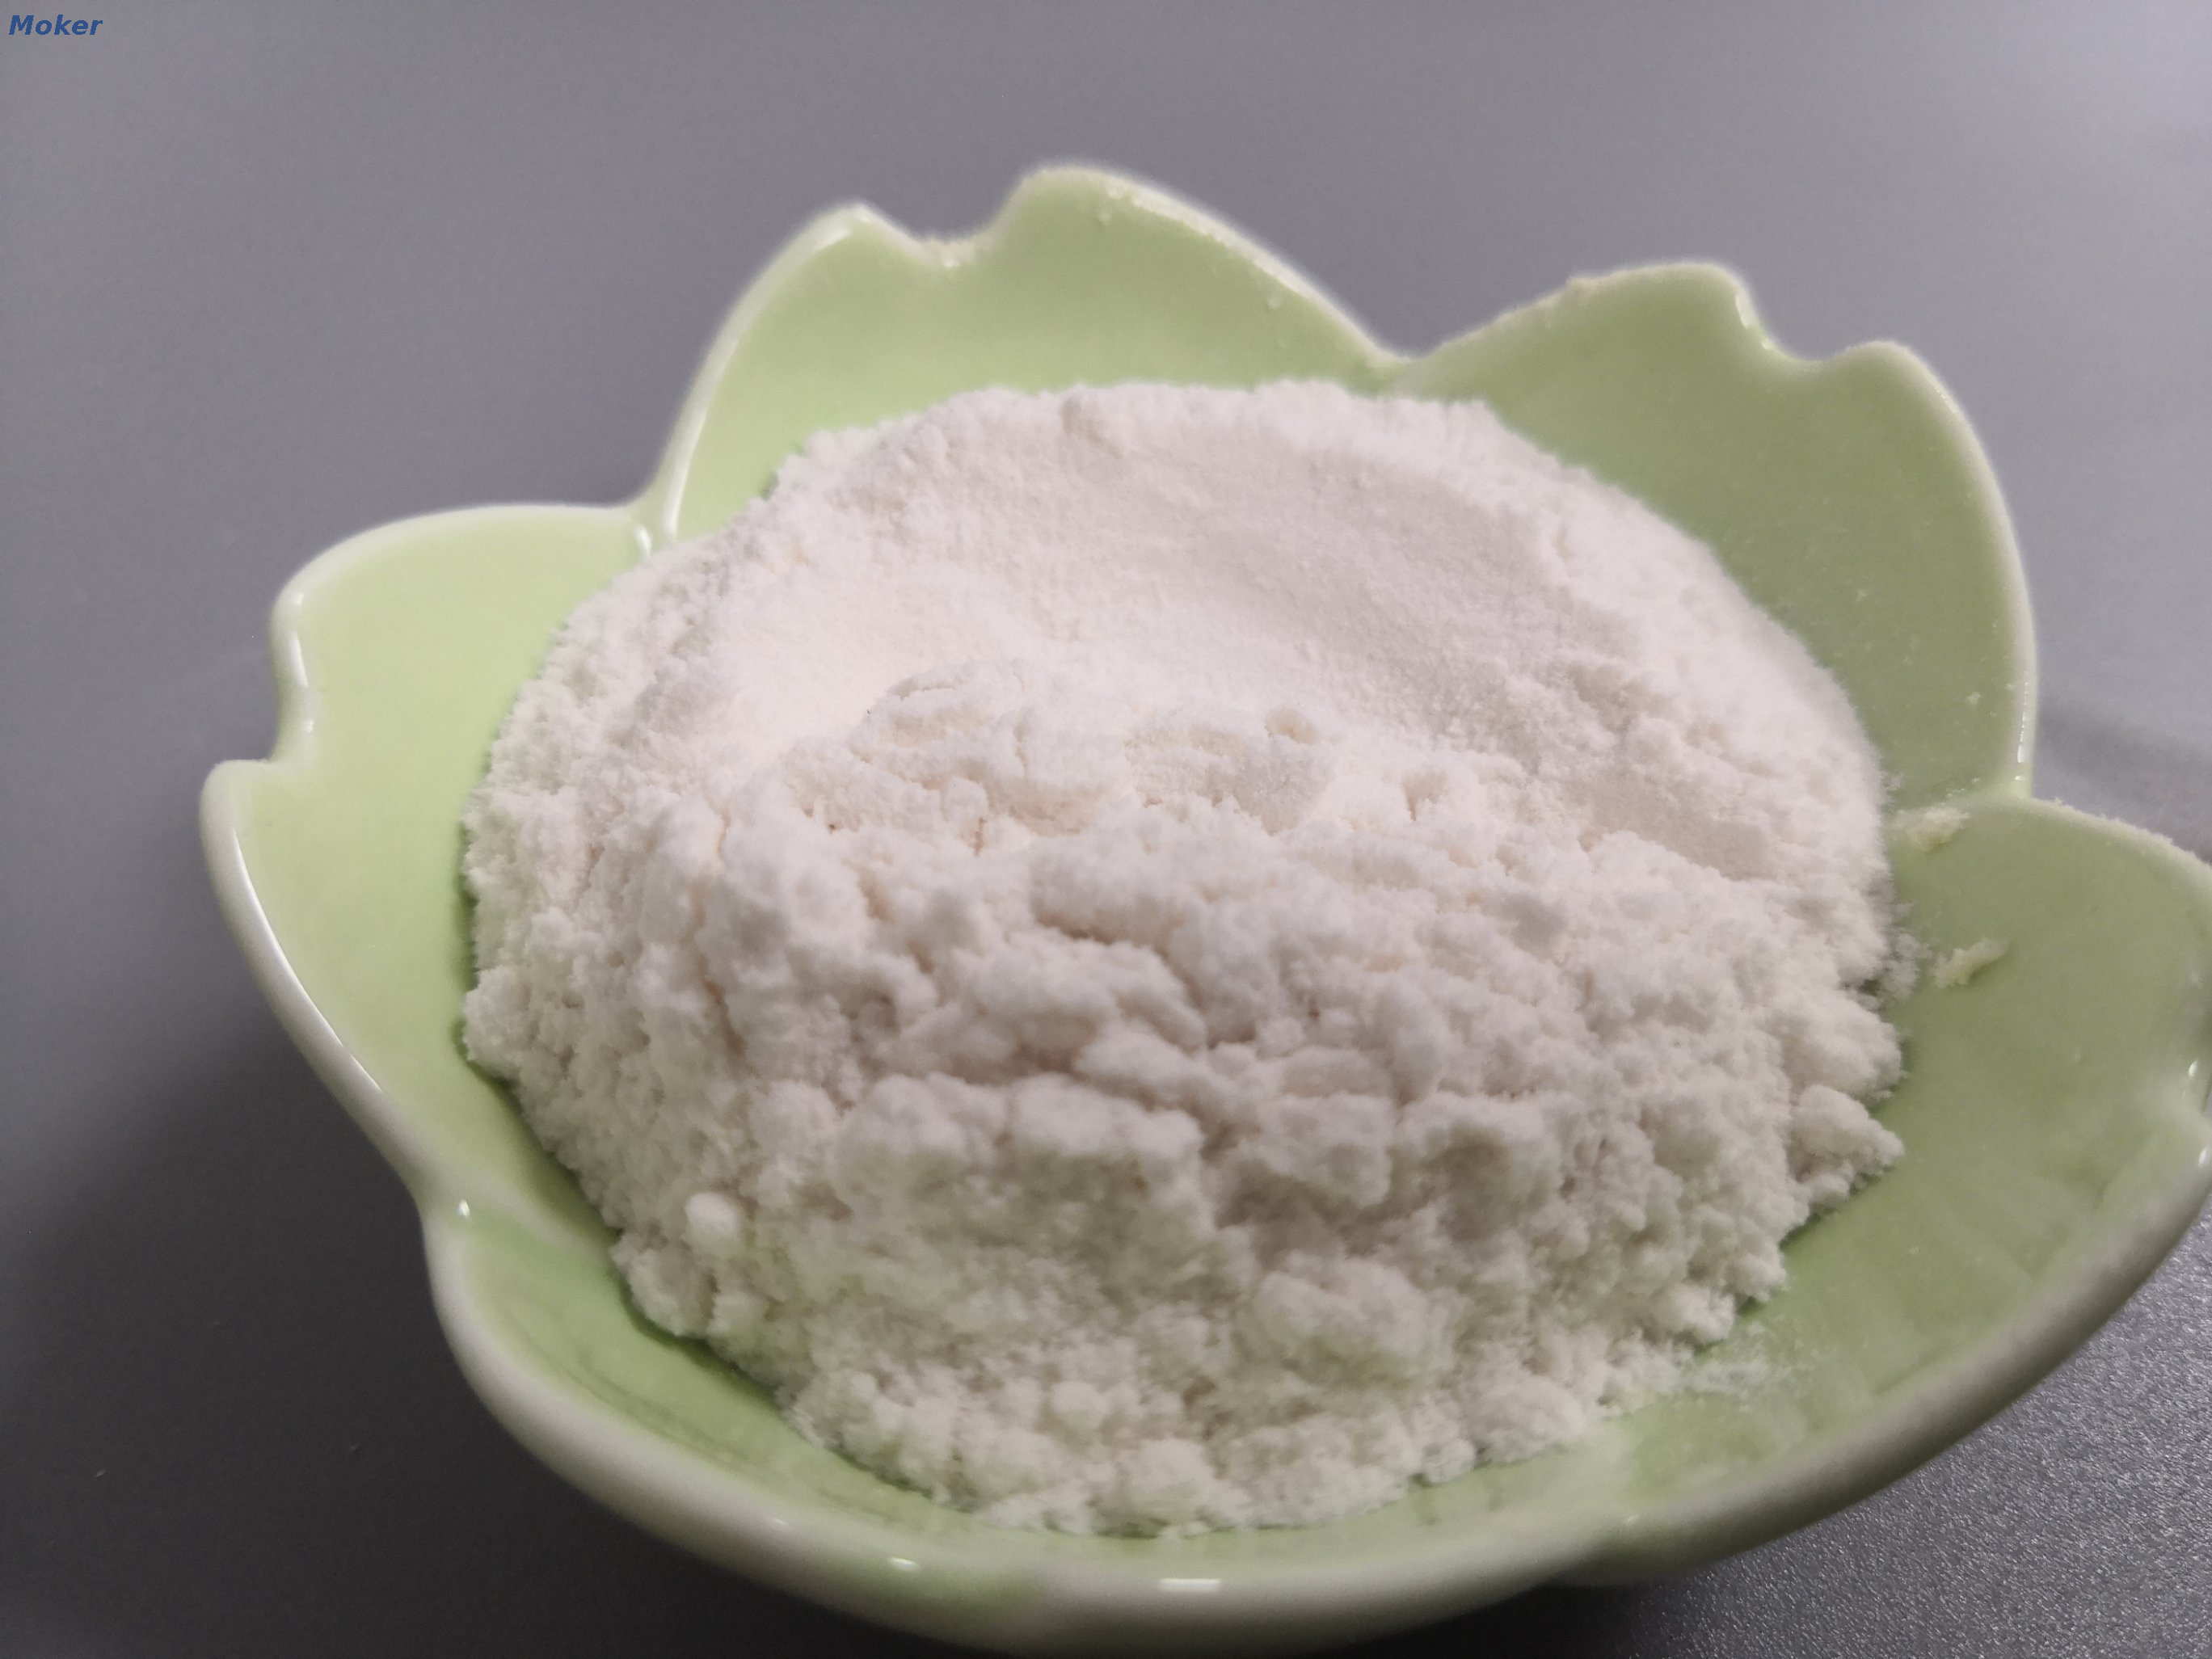 Large Quantities, High Quality2-Benzylamino-2-Methyl-1-Propanol 10250-27-8 New BMK Powder